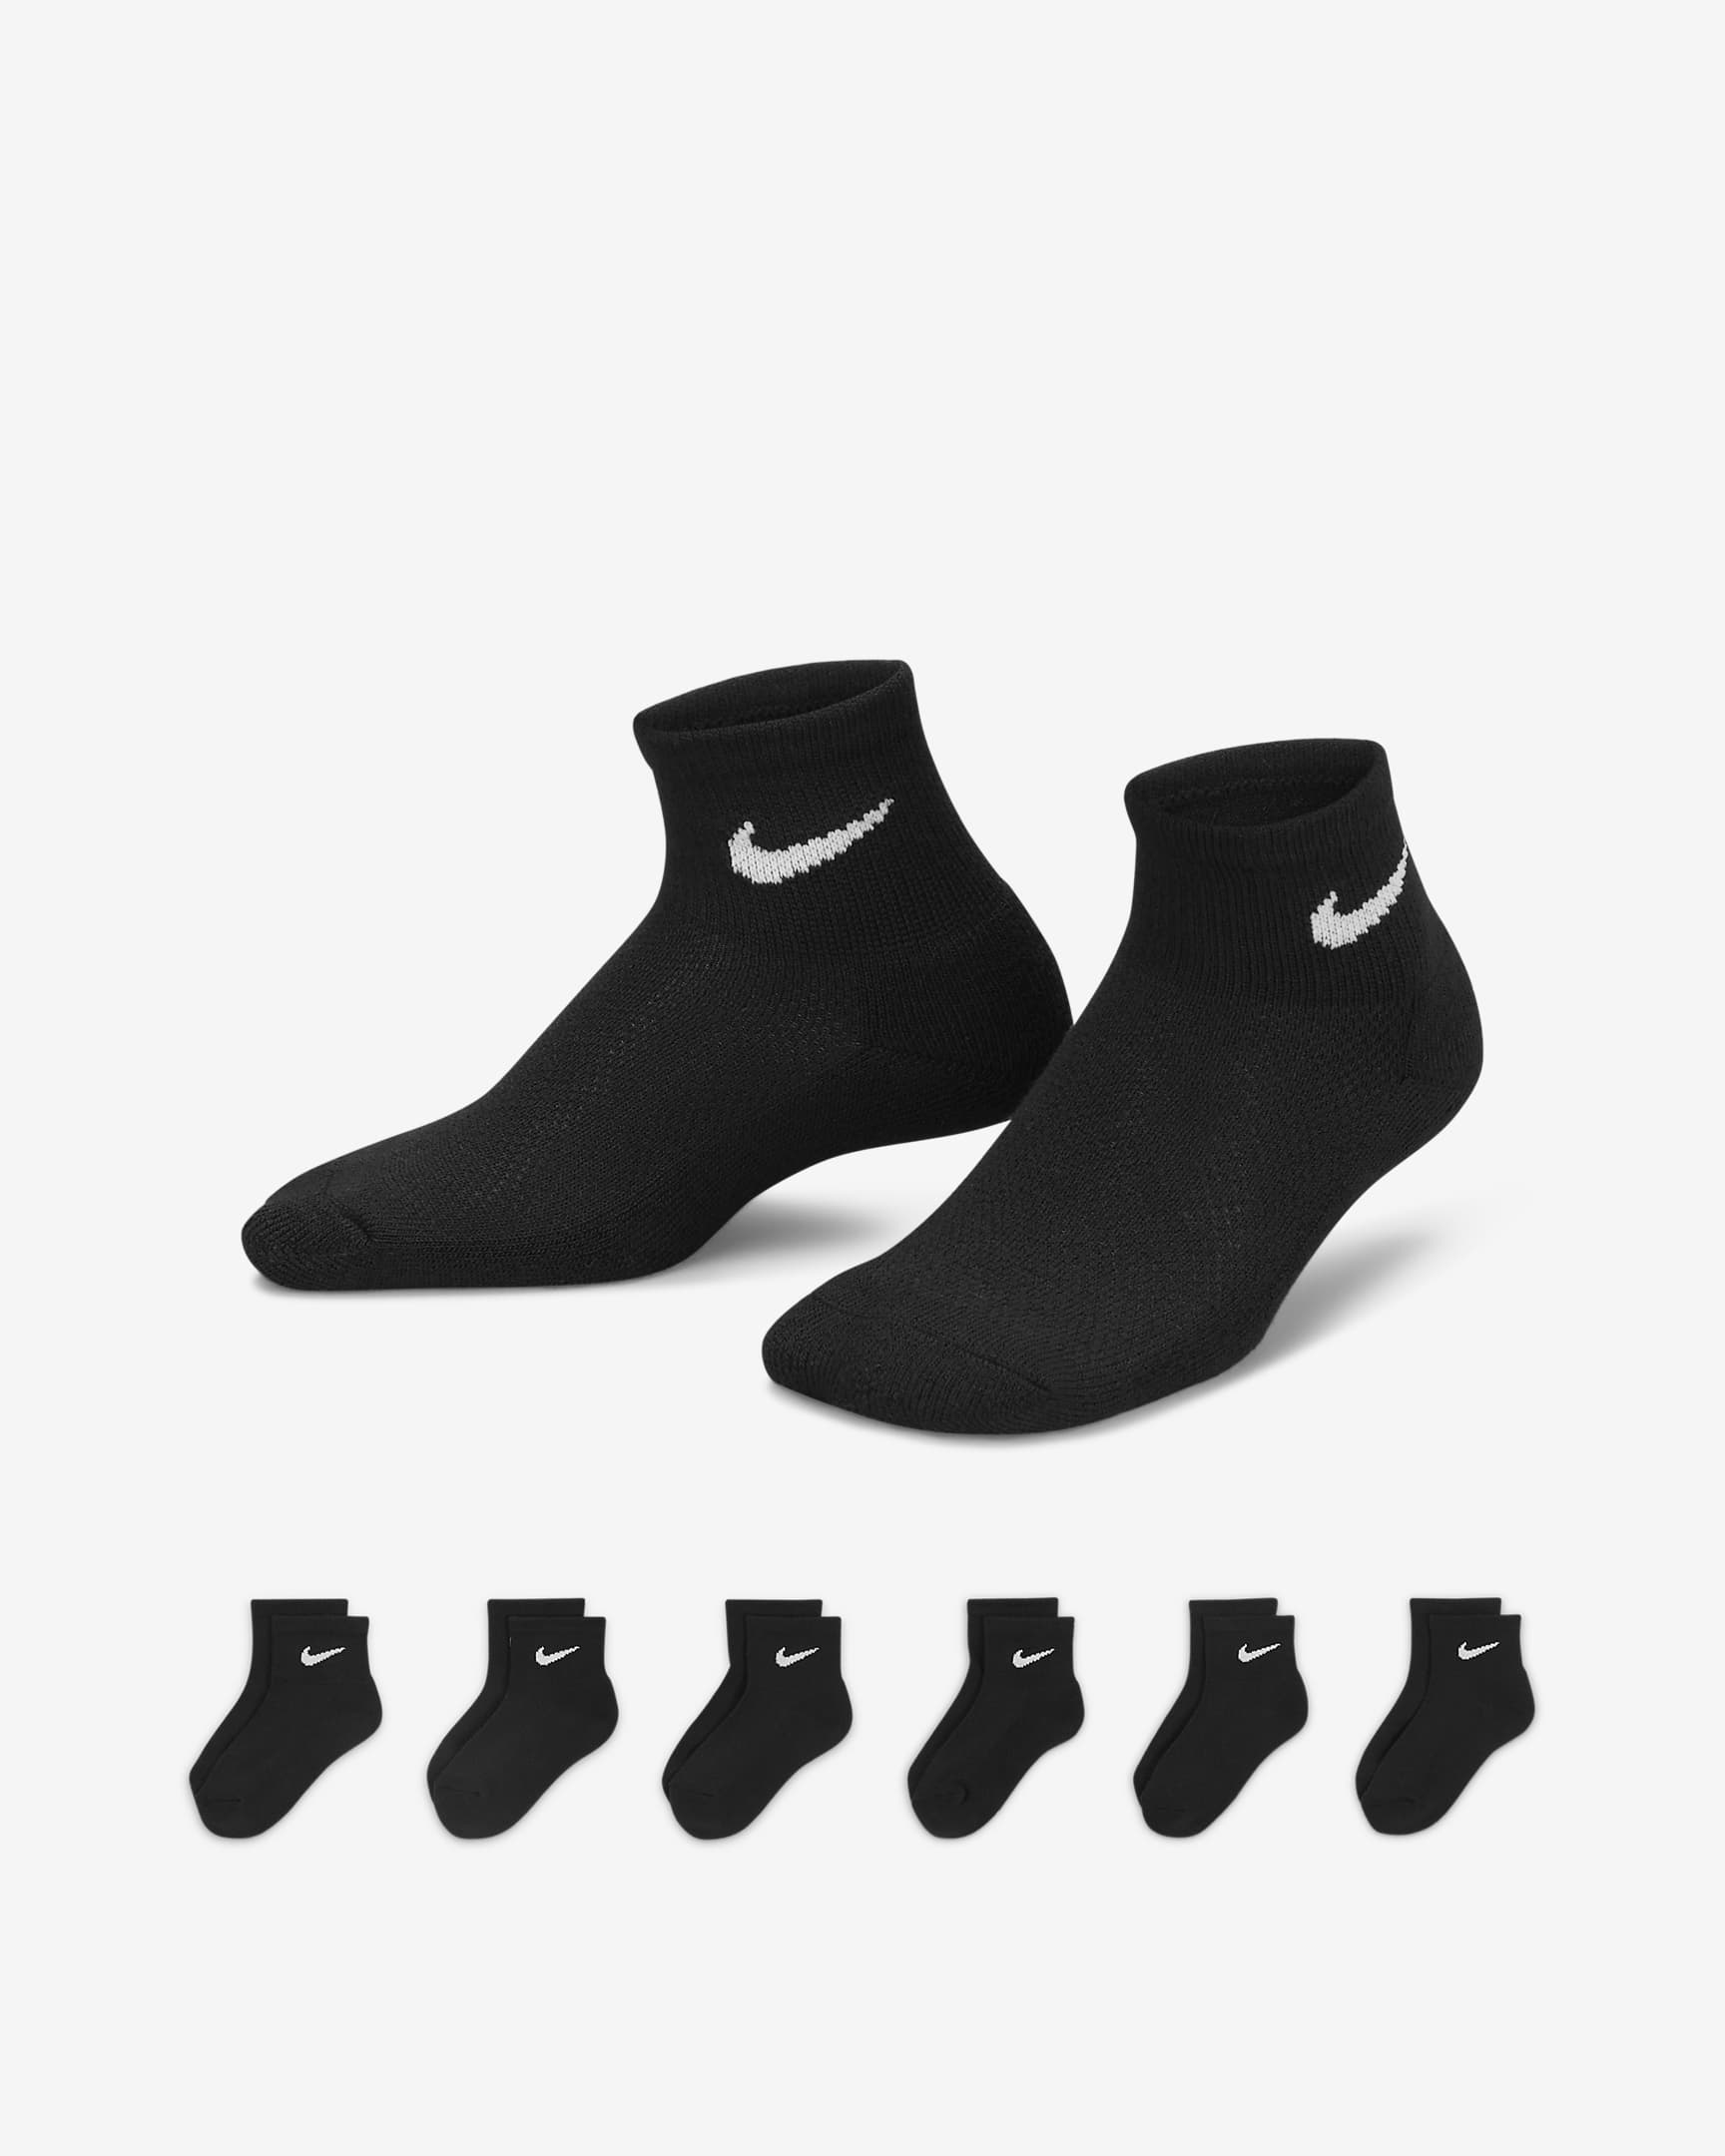 Nike Little Kids' Ankle Socks Box Set (6 Pairs). Nike.com